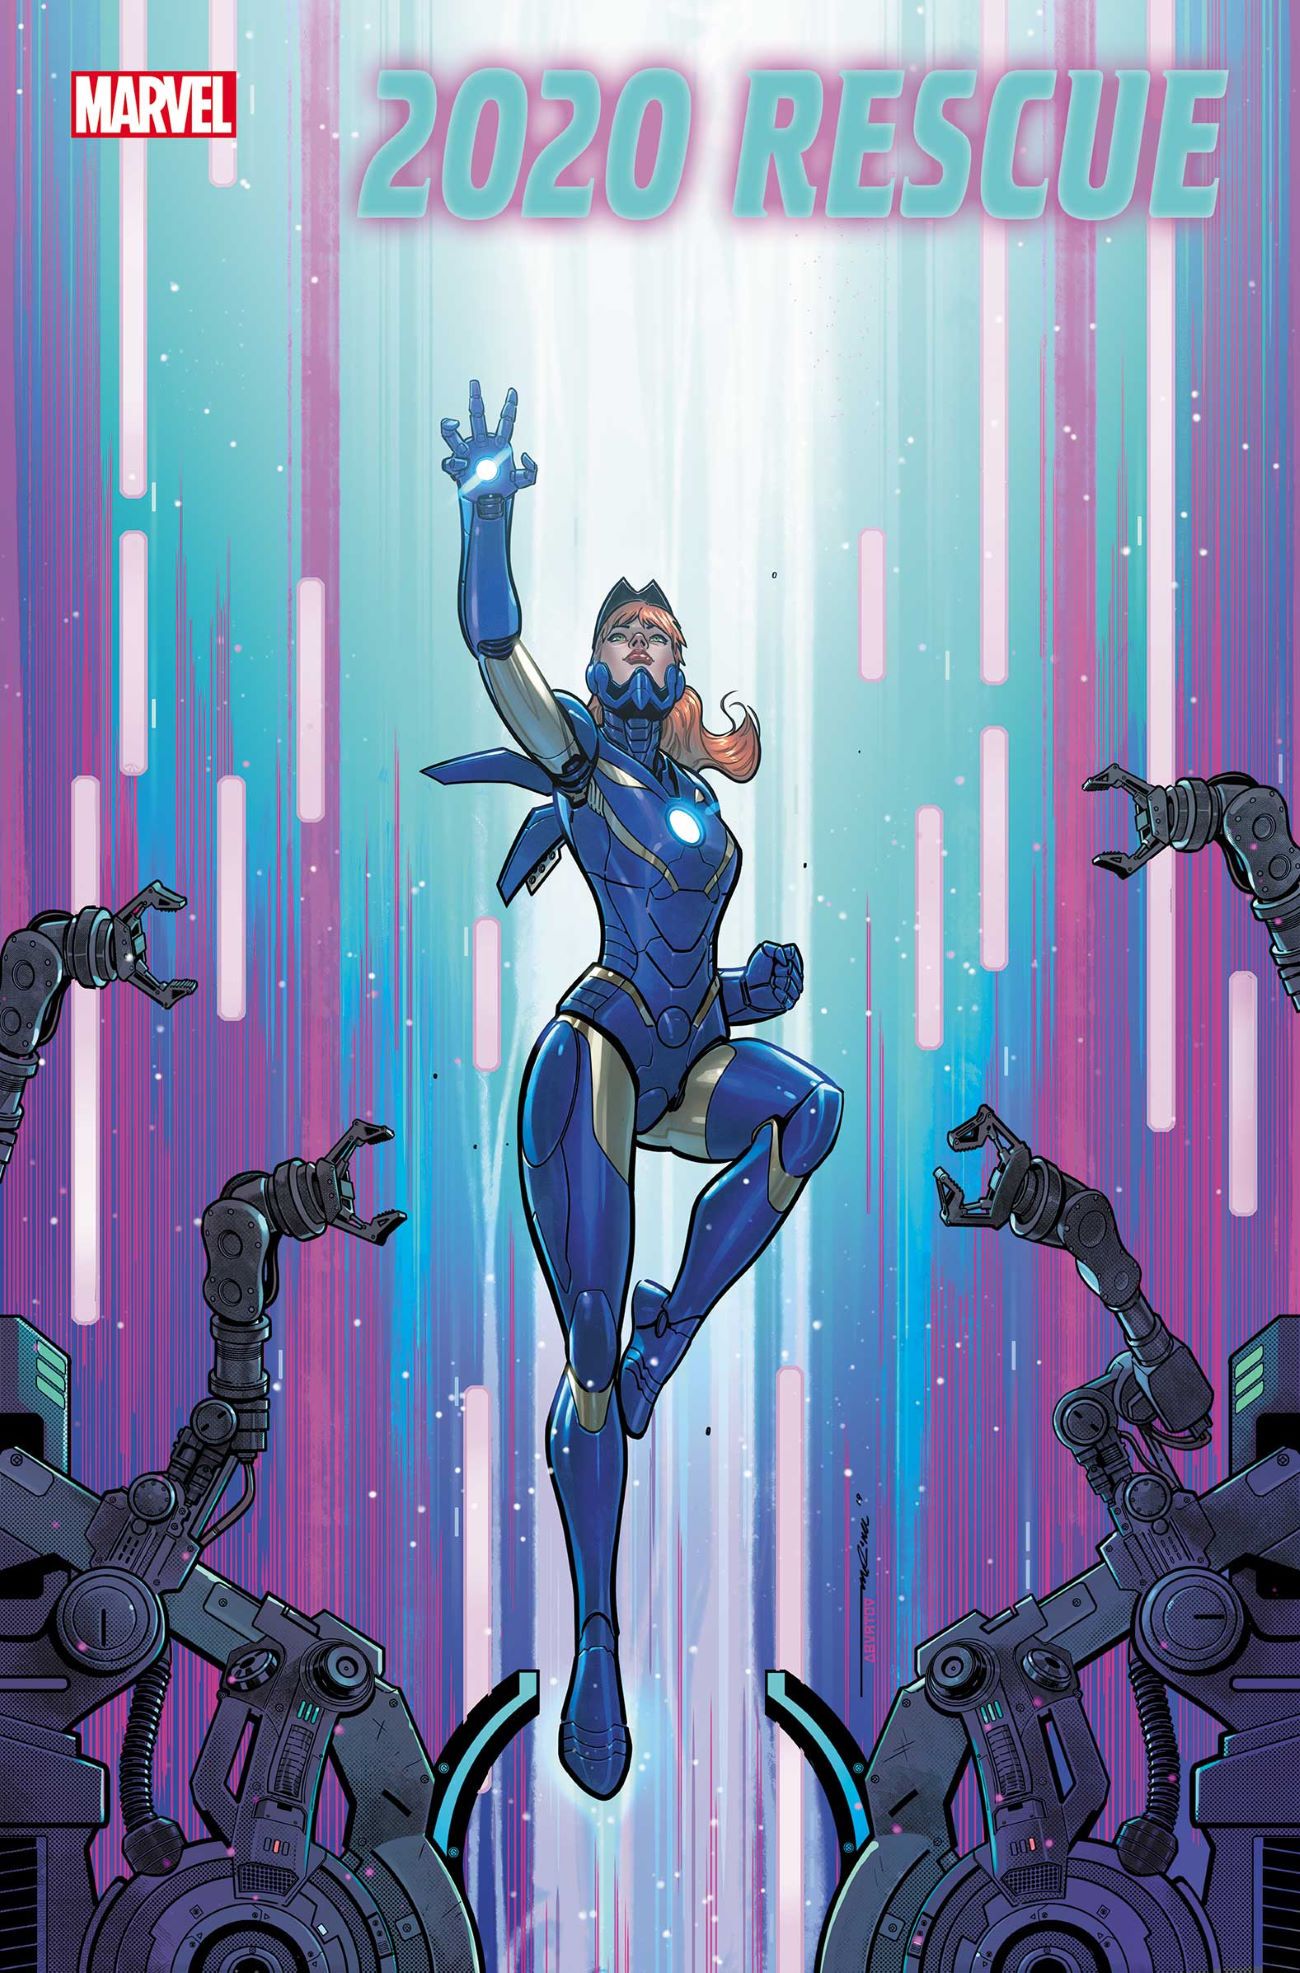 Rescue 2020 Marvel Comic Cover